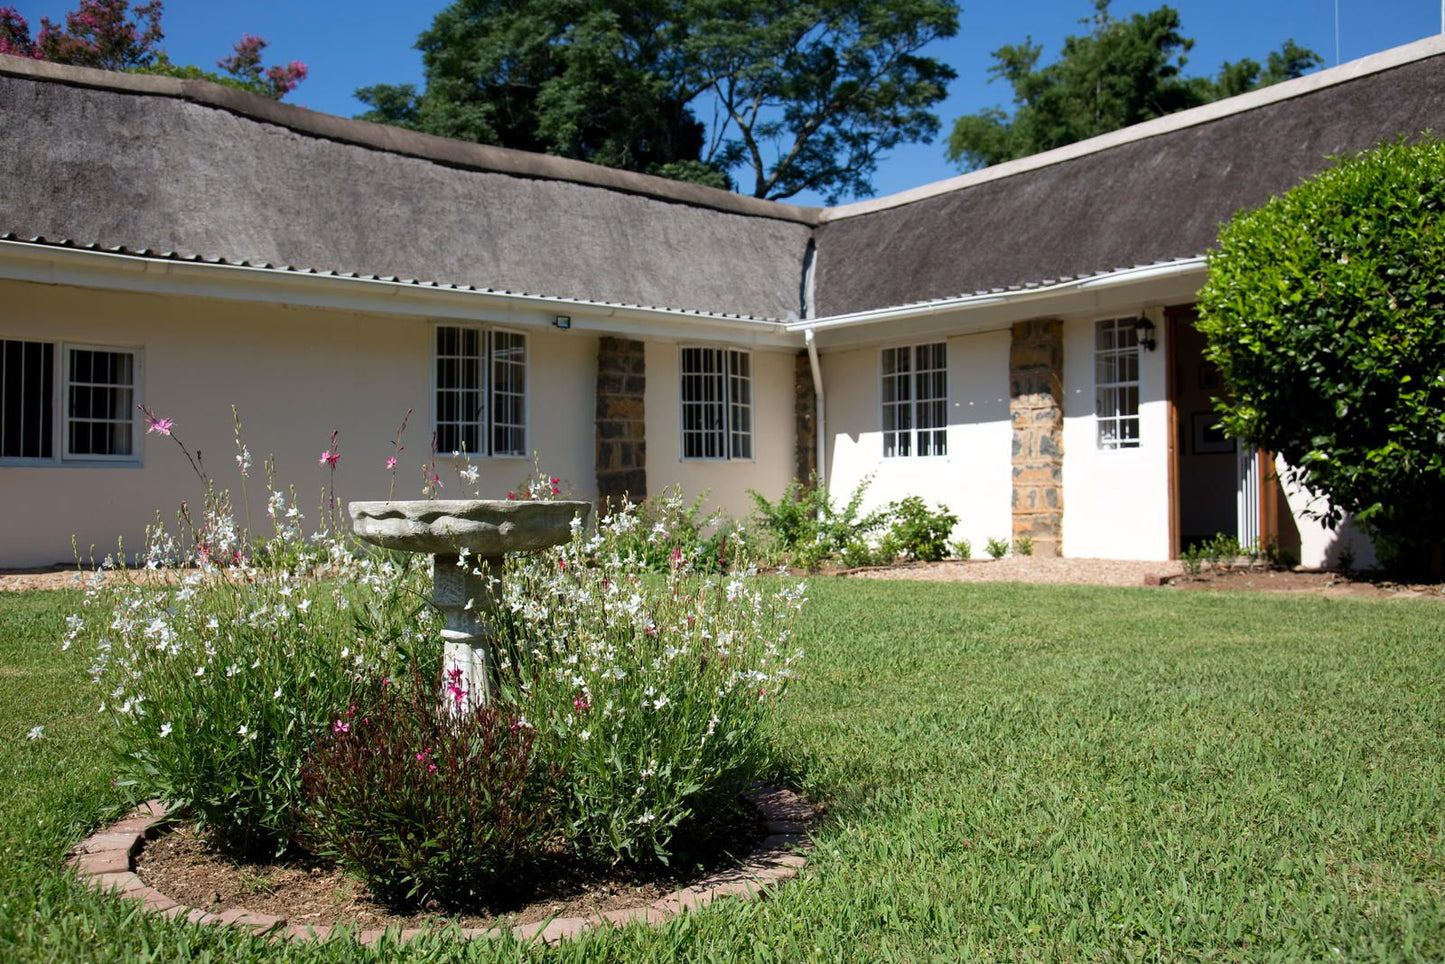 Ferndene Farm Dargle Howick Kwazulu Natal South Africa House, Building, Architecture